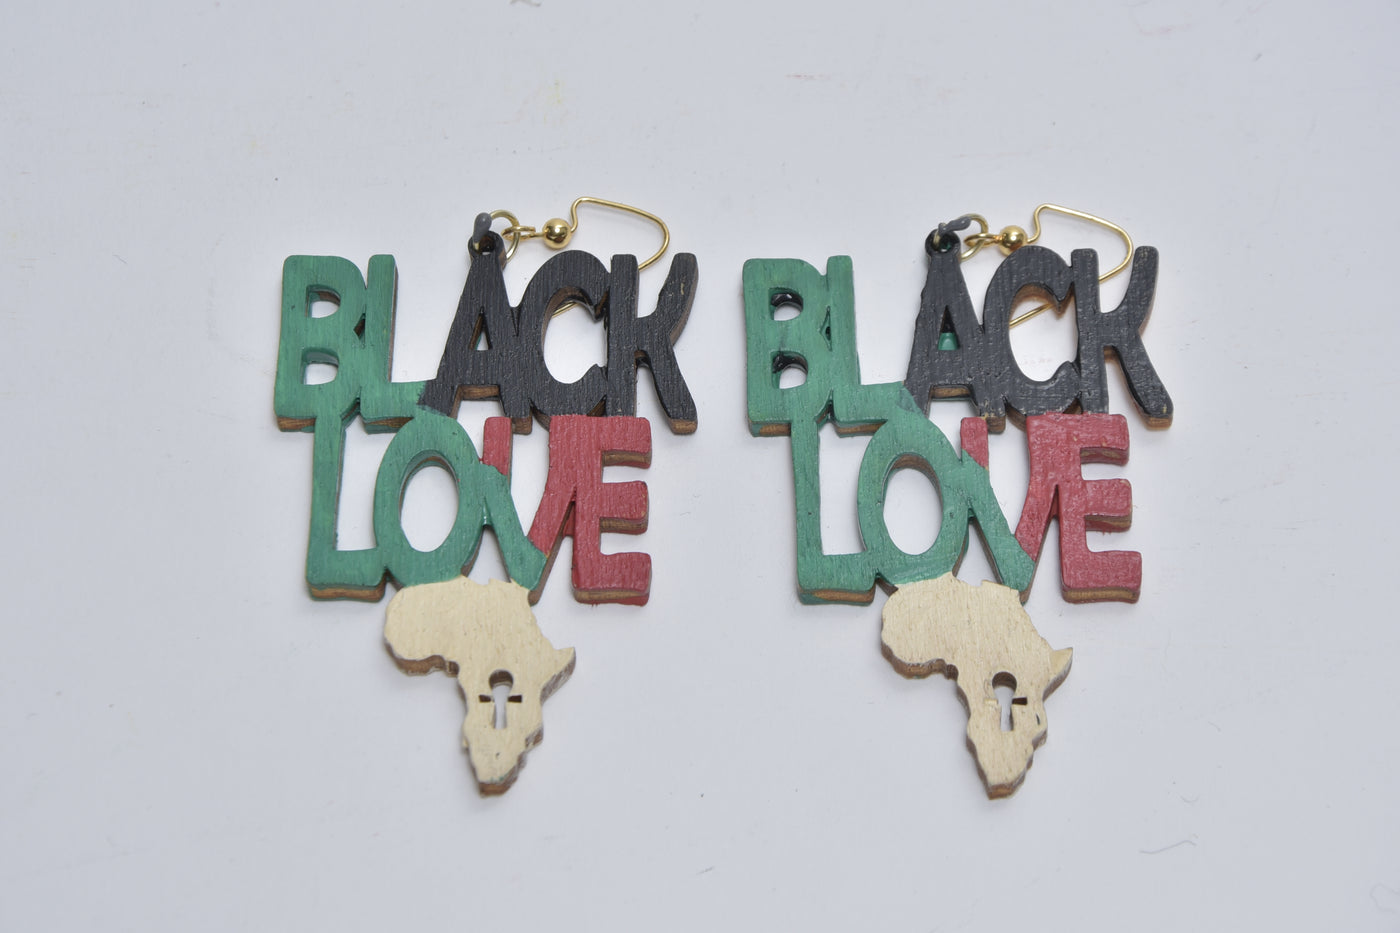 I am Black Love